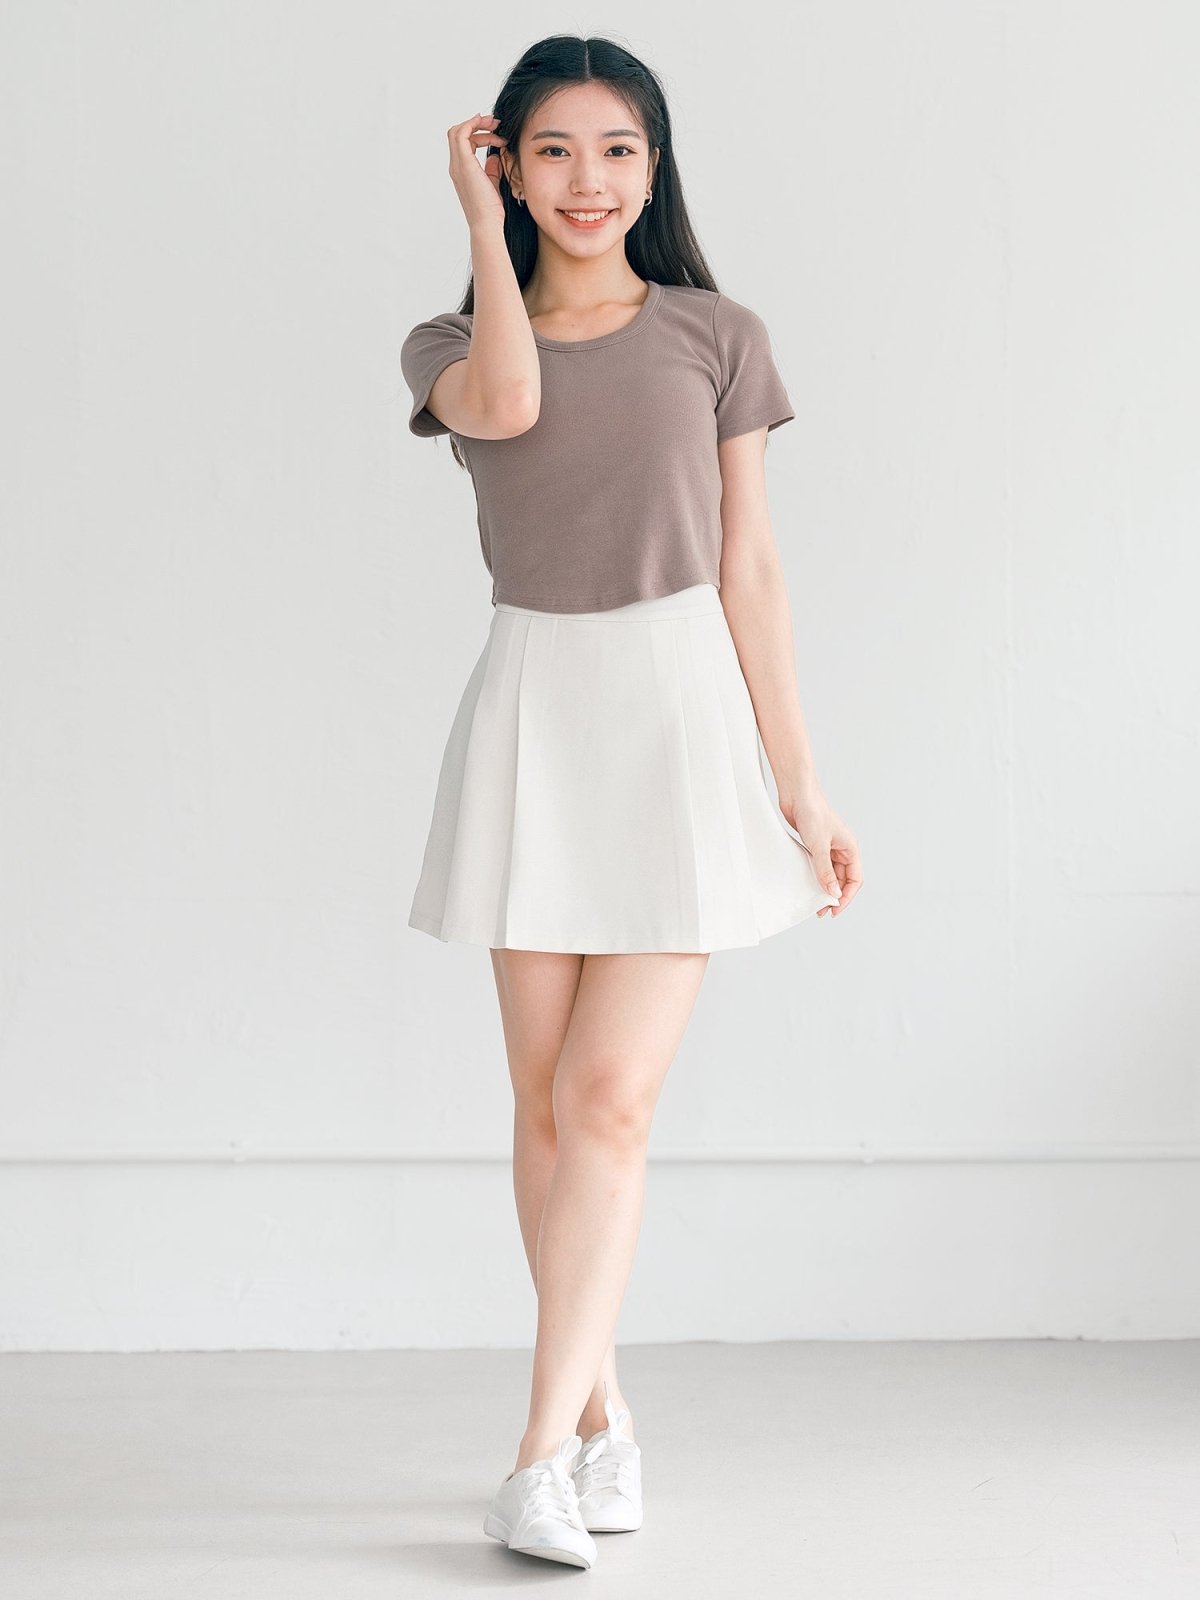 Seraphine Pleated Mini Skirt - DAG-G-220171WhiteS - Mochi Ivory - S - D'zage Designs